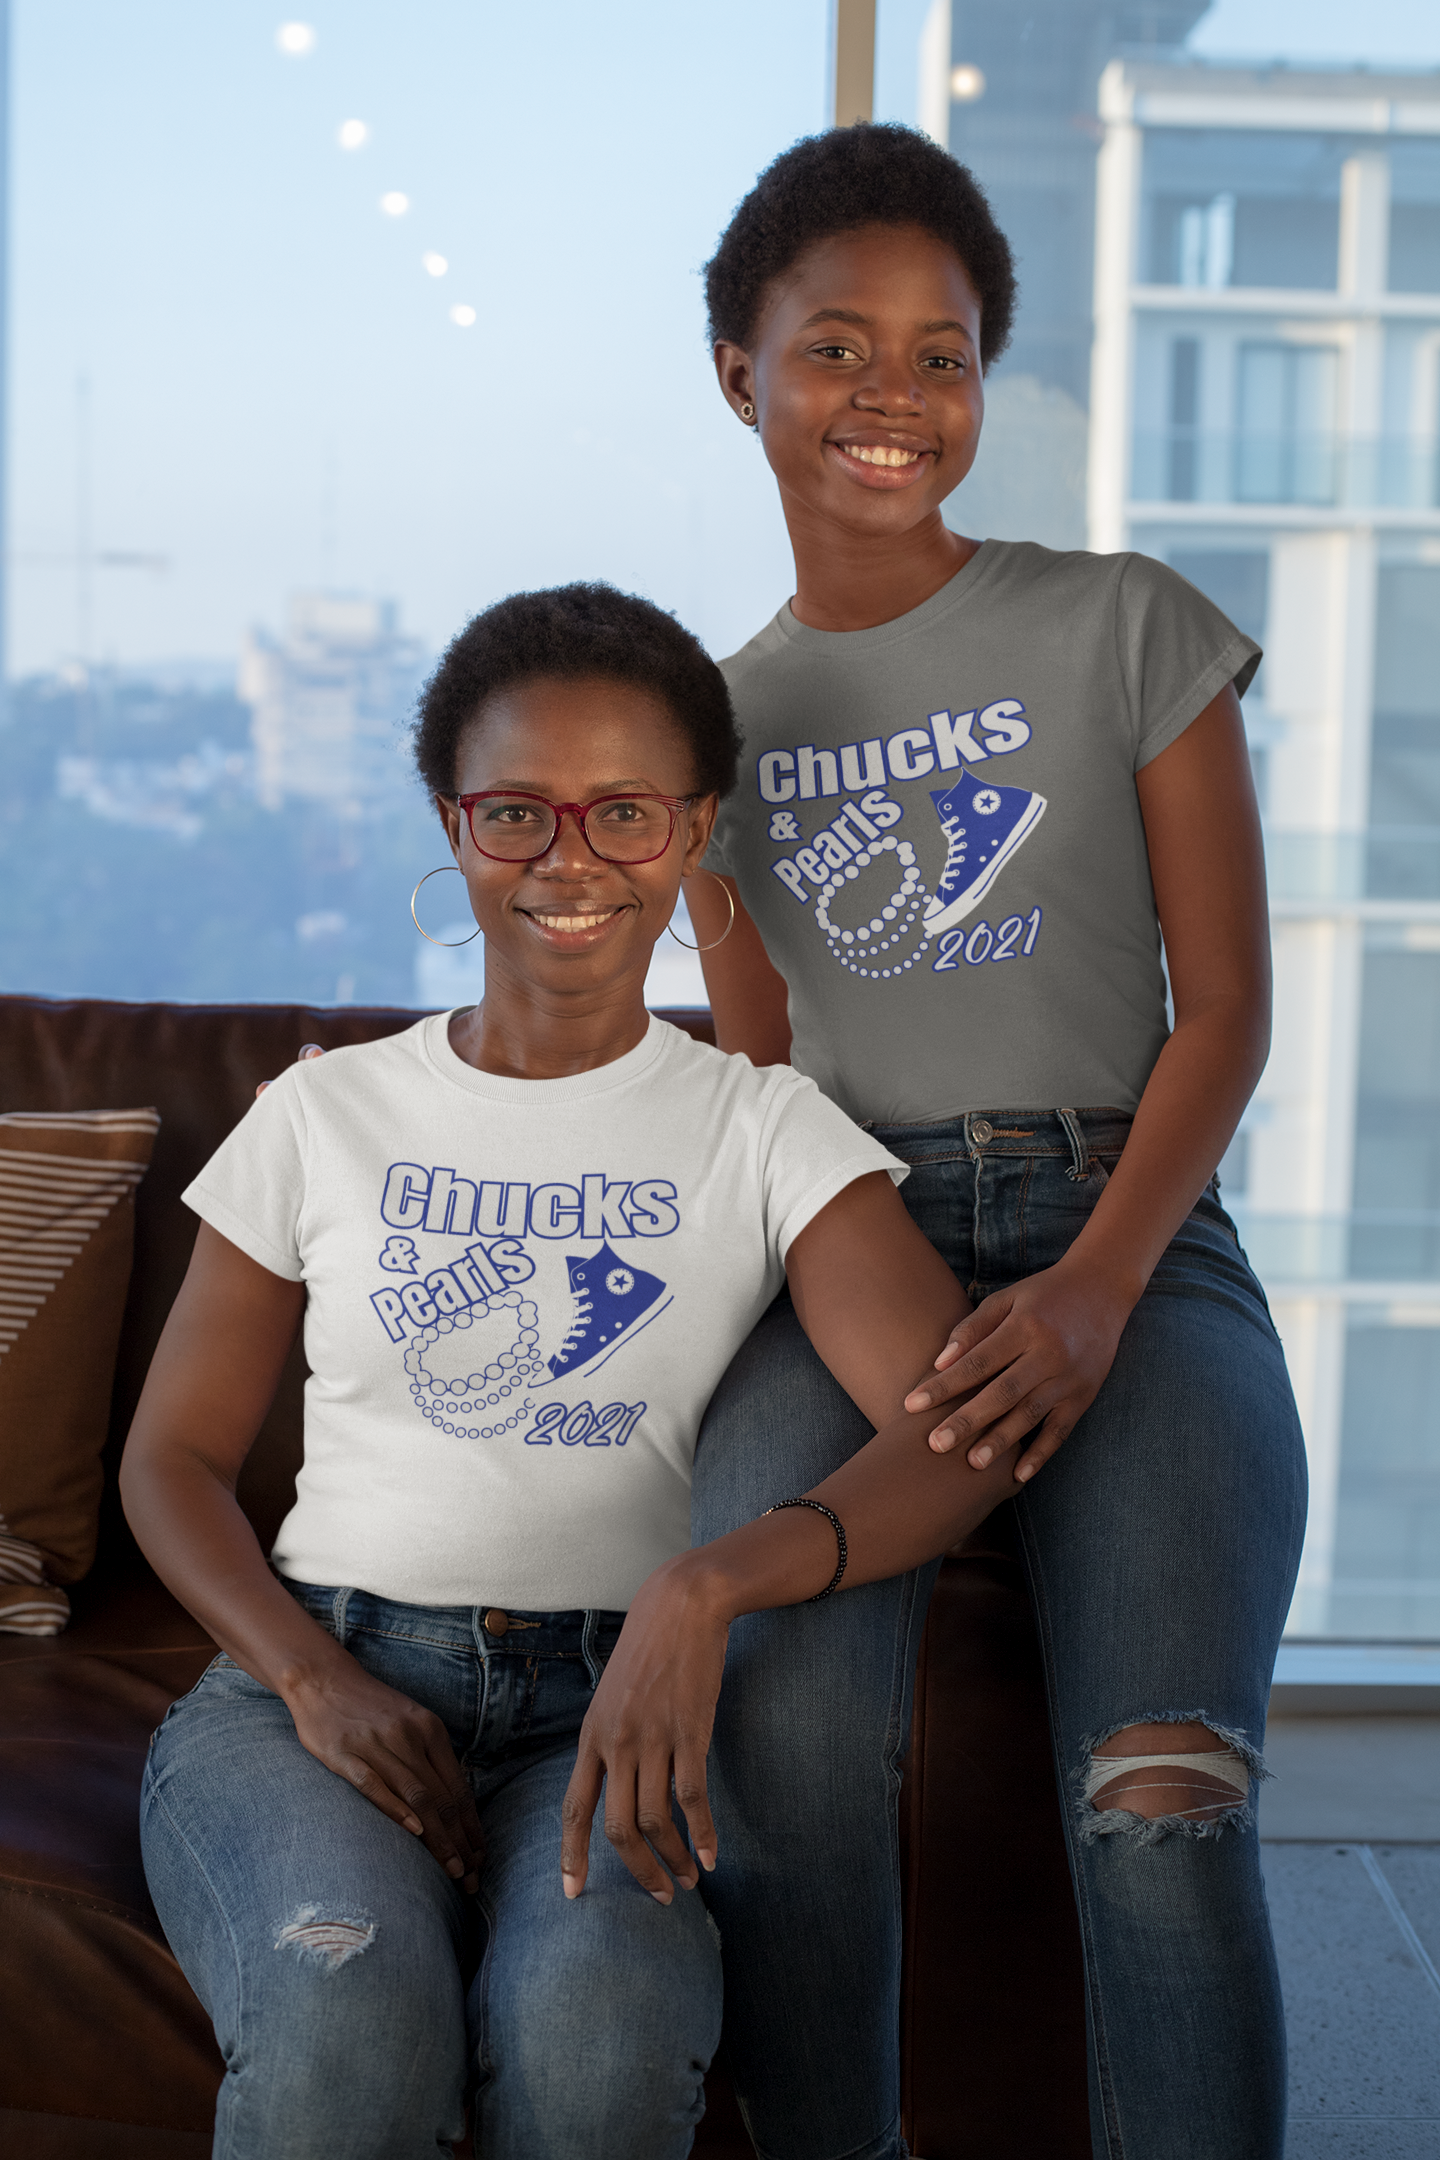 Chucks and Pearls Kamala Harris MVP Shirt - Blue | Black Edition